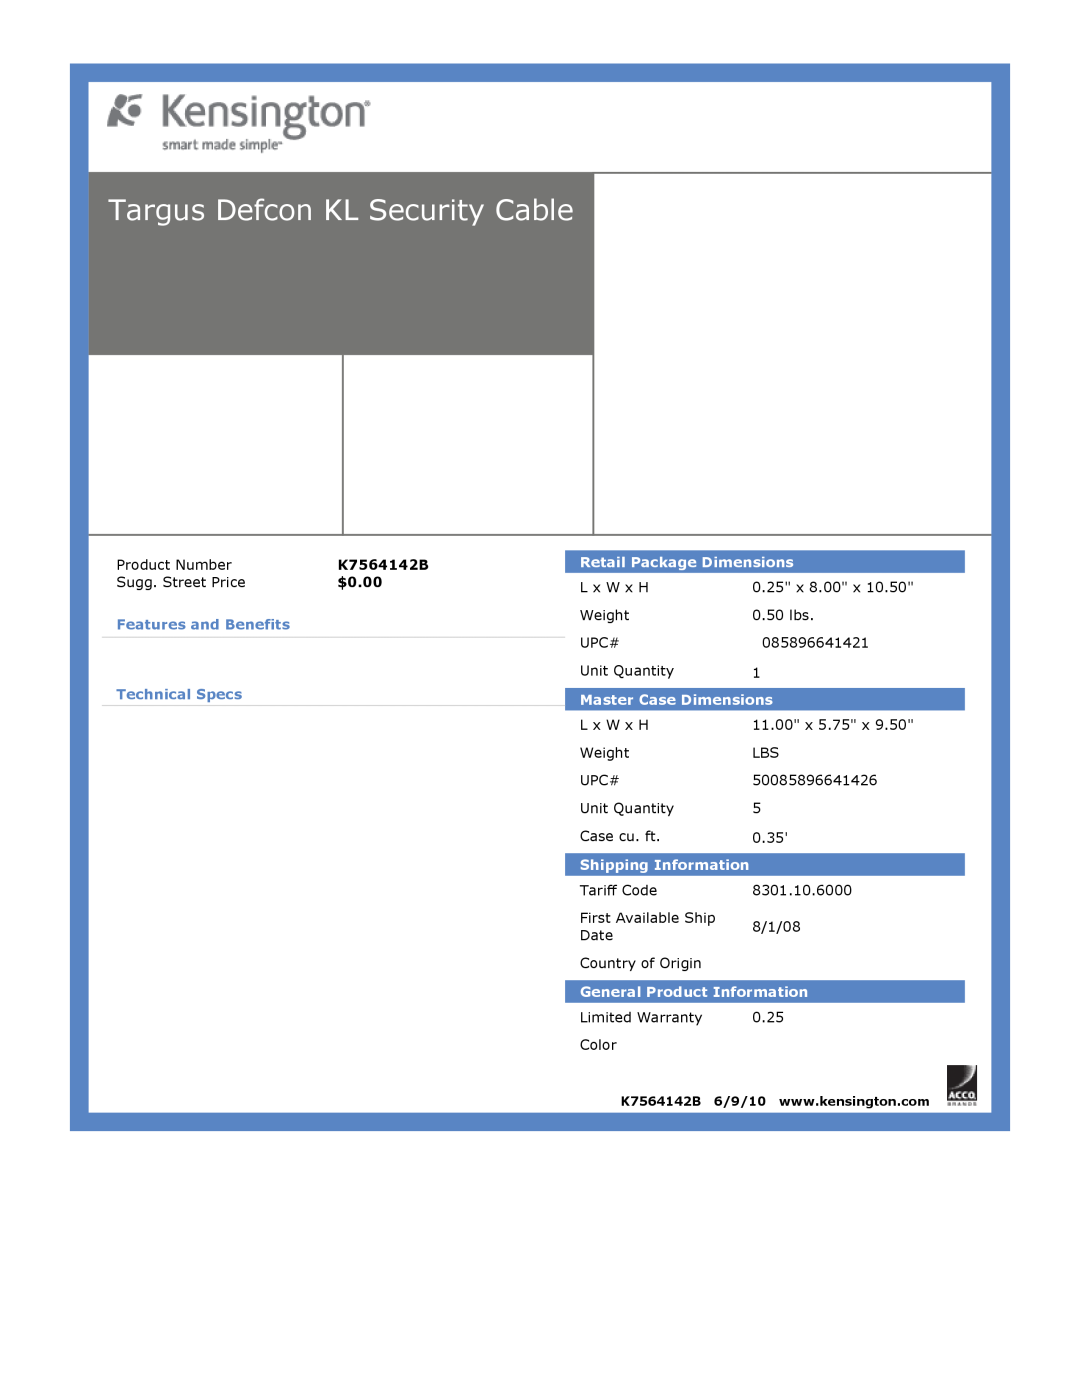 Kensington EU64325 Targus Defcon KL Security Cable, $0.00, Features and Benefits Technical Specs, Master Case Dimensions 